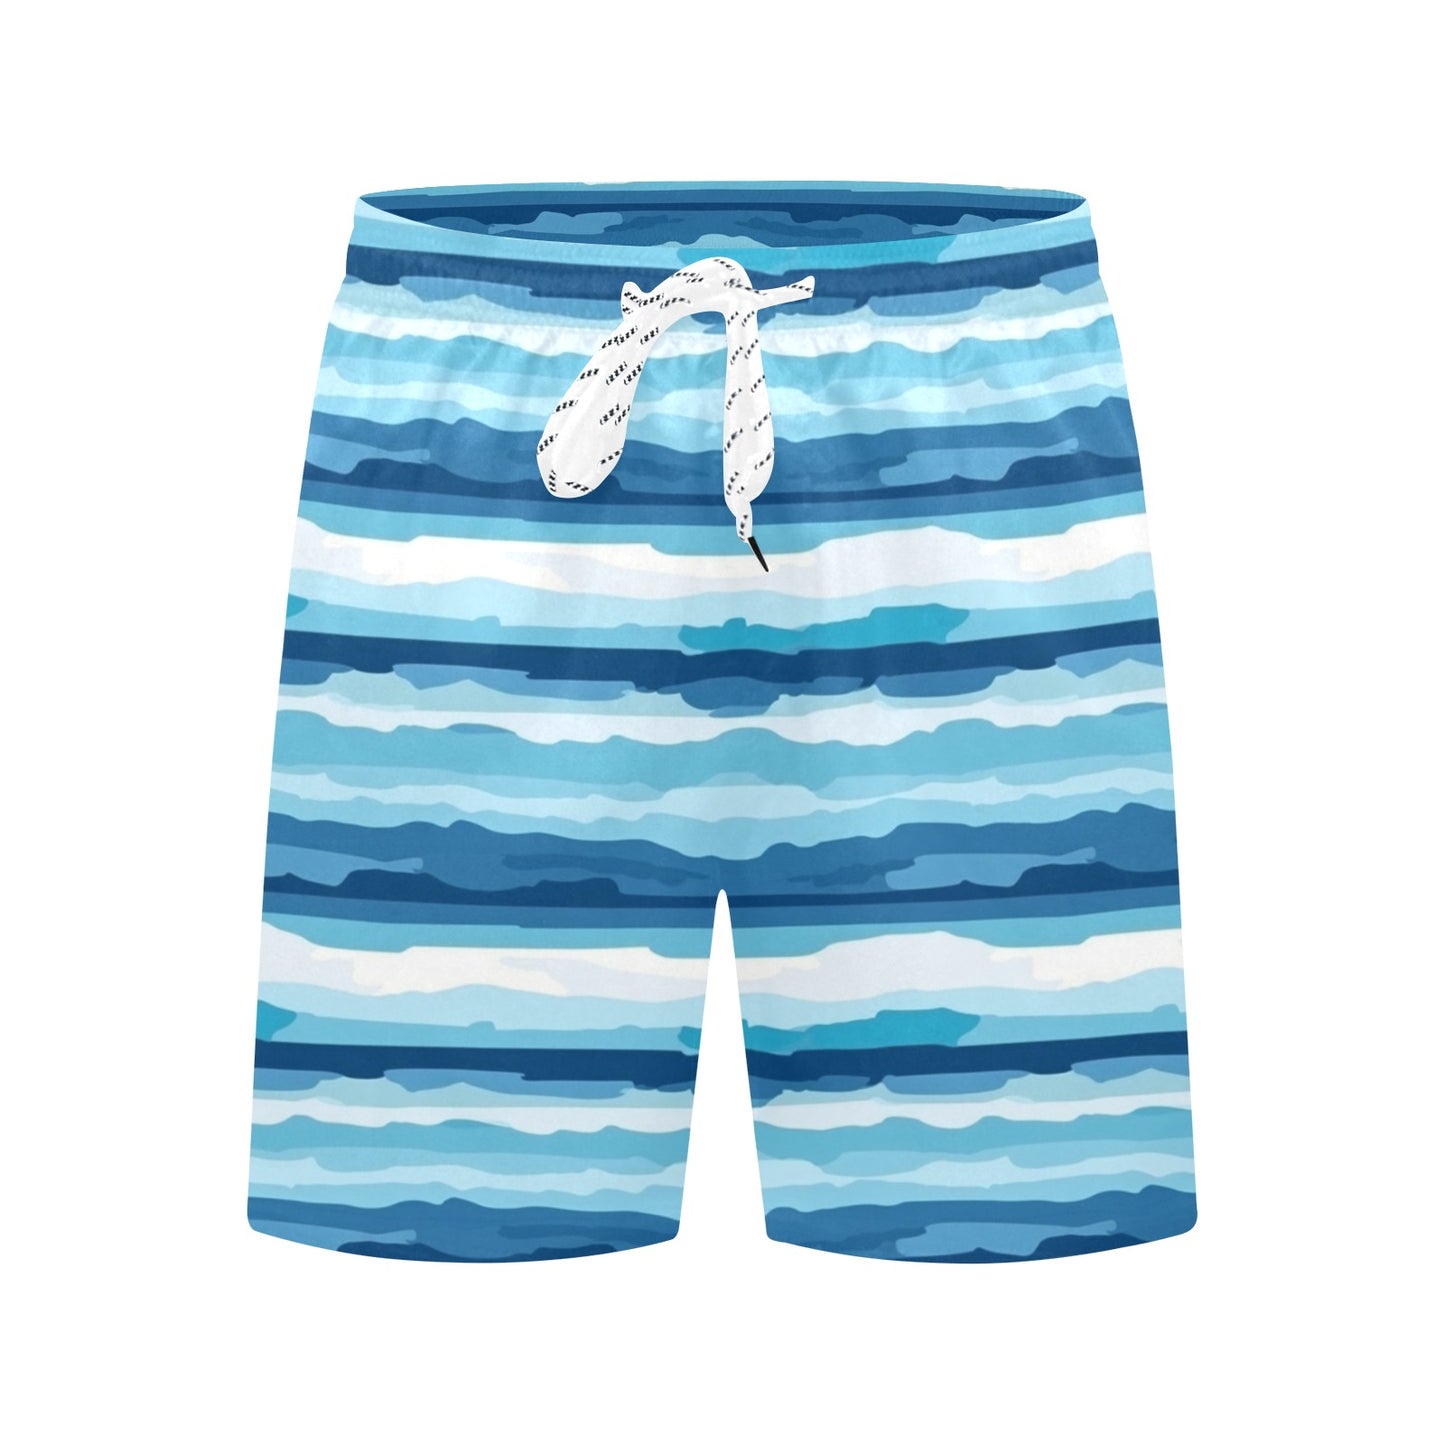 Striped Men Swim Trunks, Ocean Blue Mid Length Shorts Beach Pockets Mesh Lining Drawstring Boys Casual Bathing Suit Plus Size Swimwear Starcove Fashion